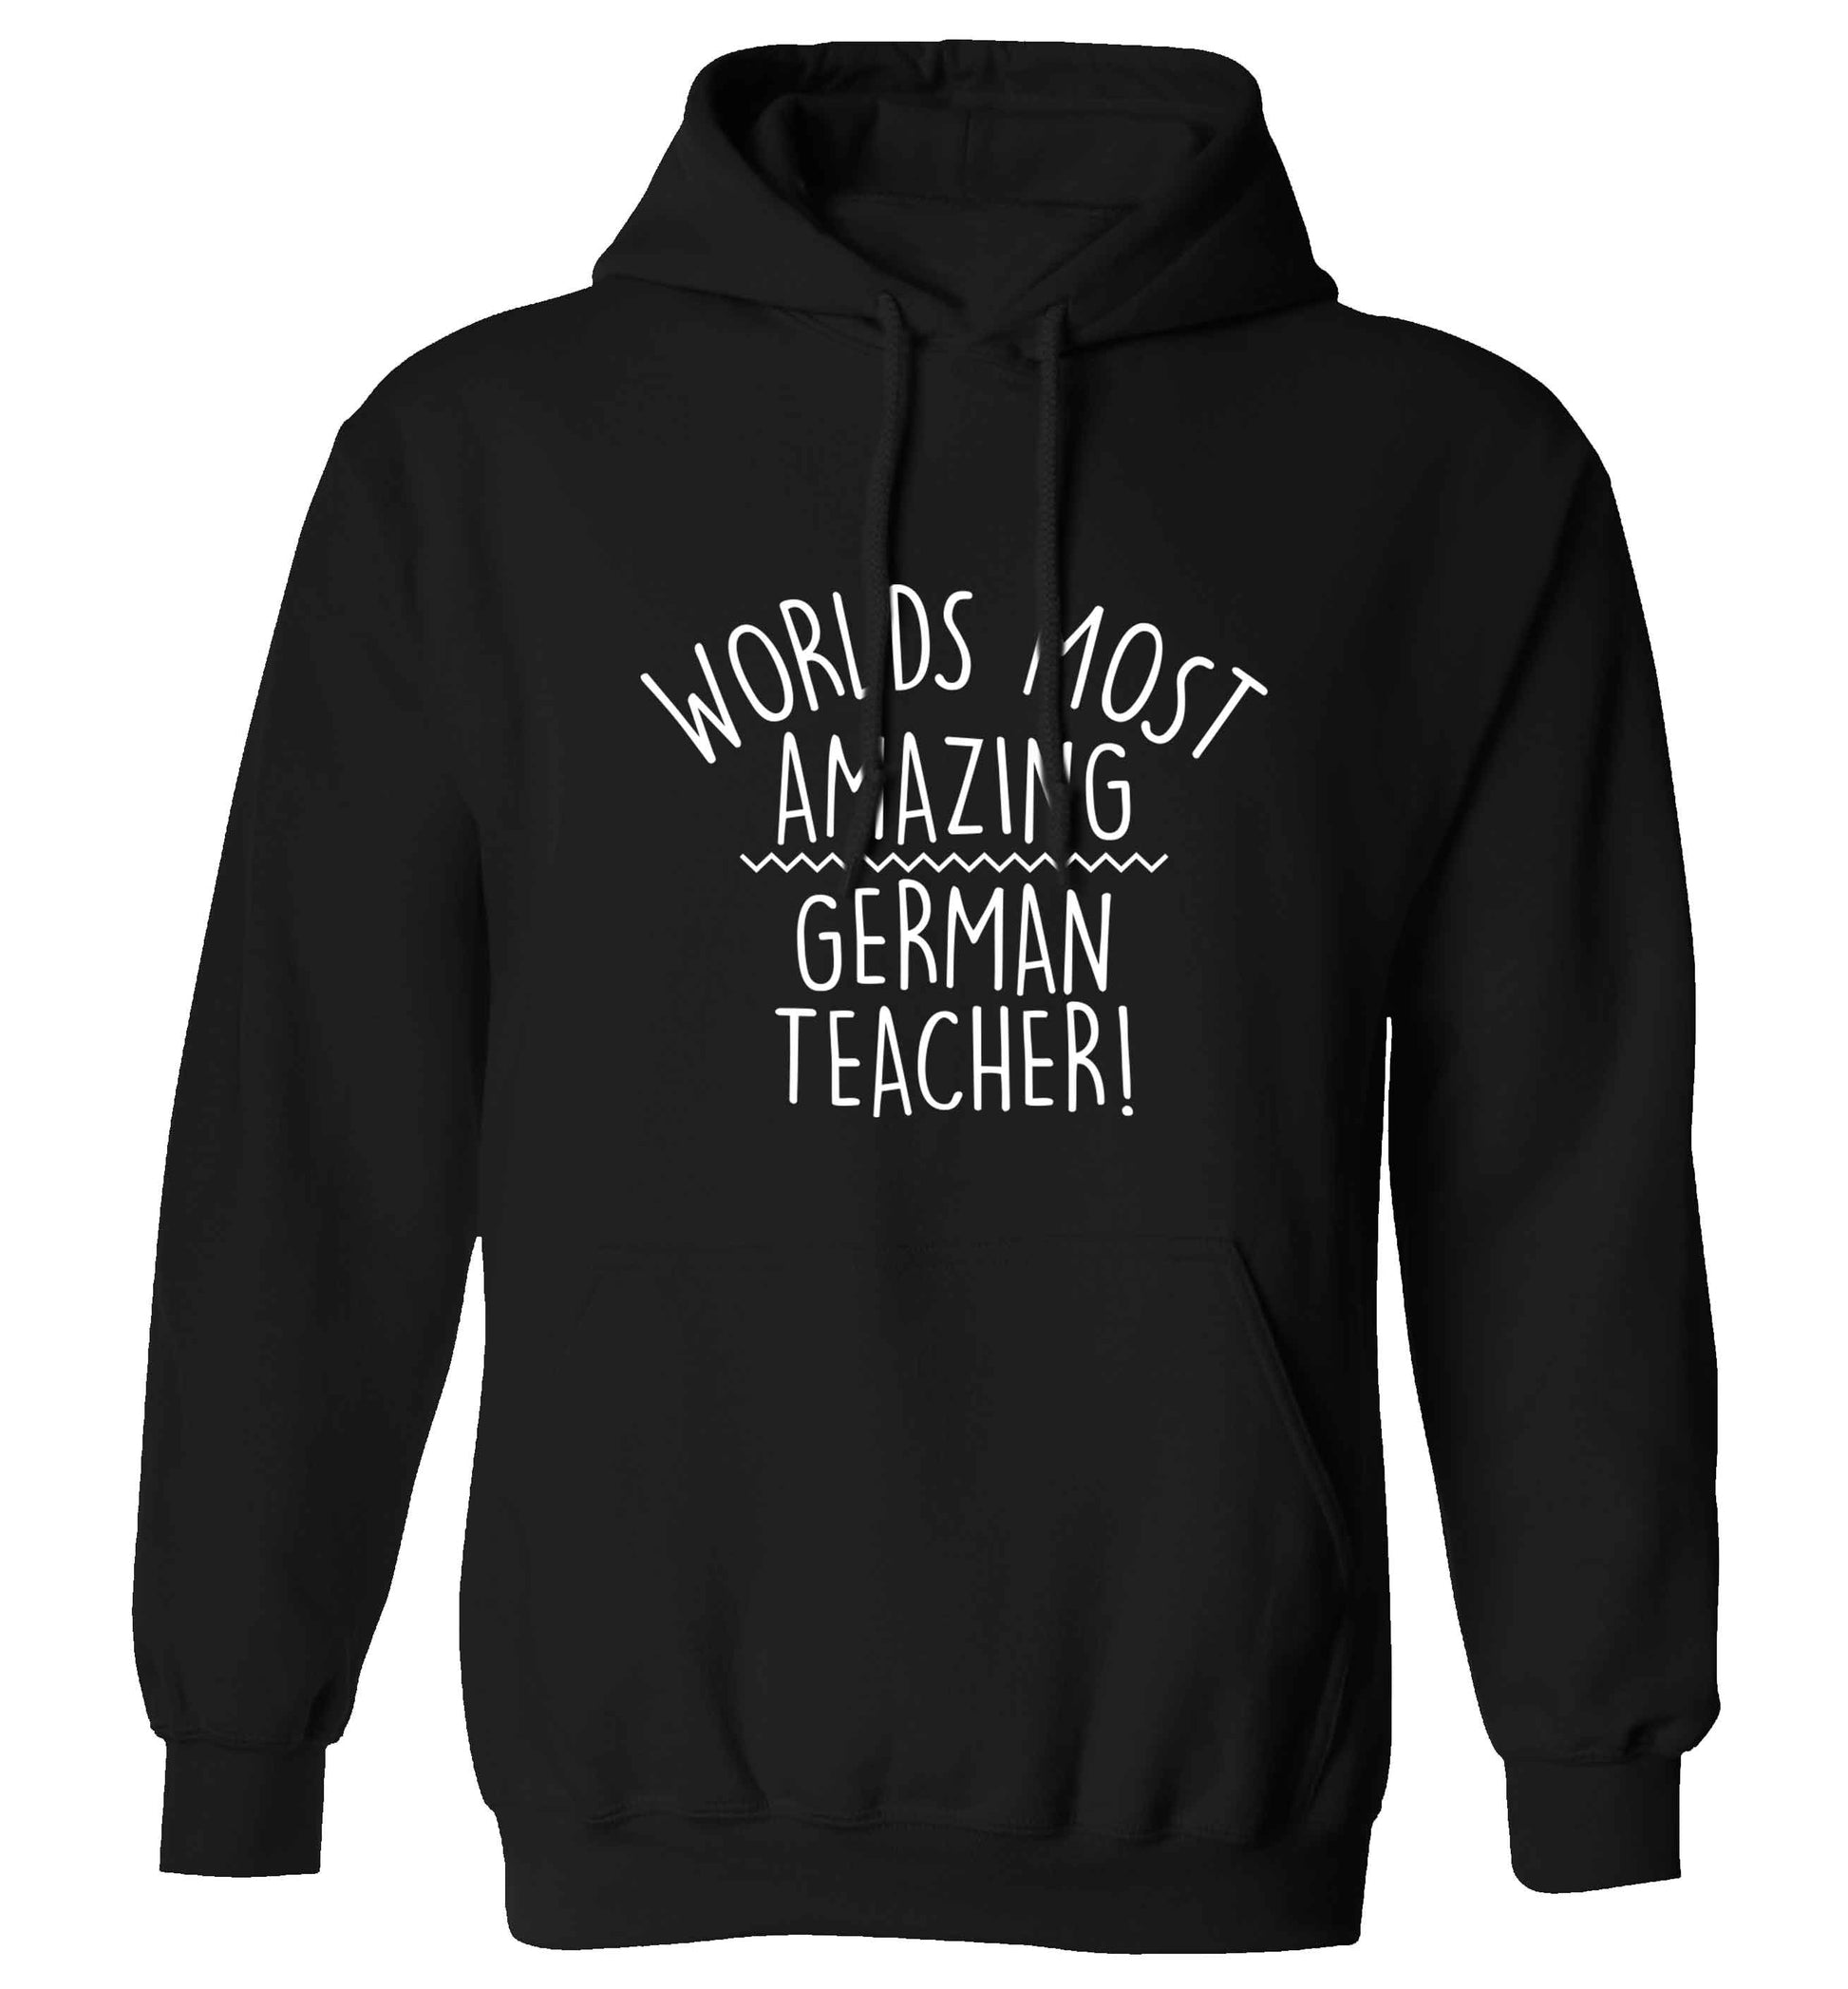 Worlds most amazing German teacher adults unisex black hoodie 2XL